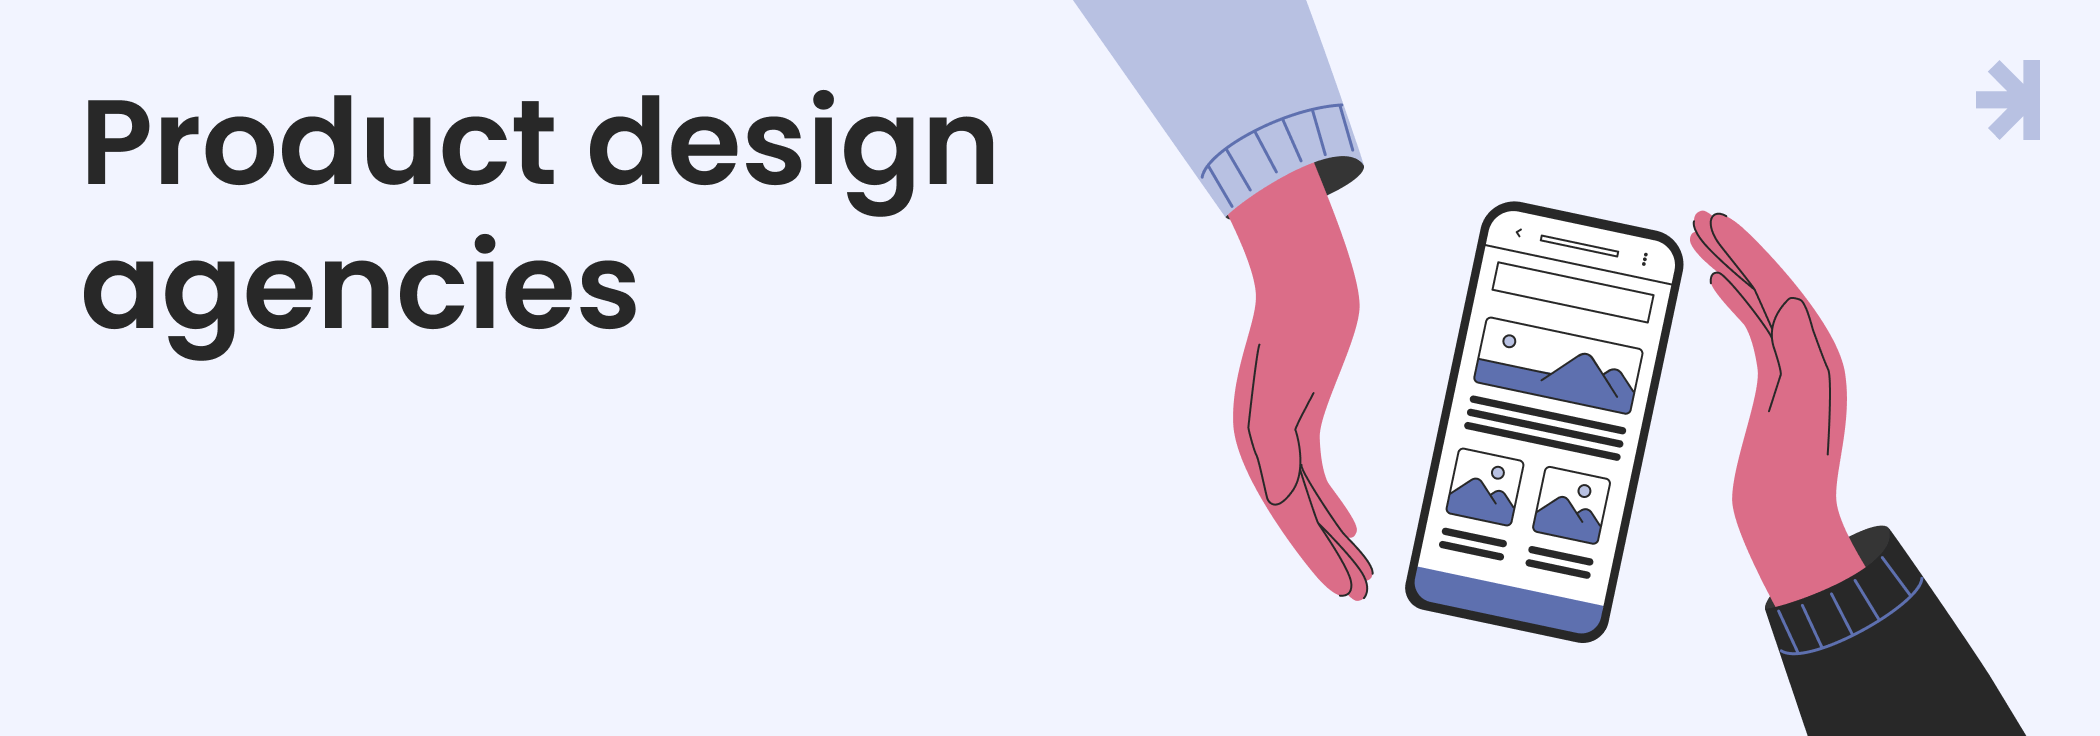 Product design agencies